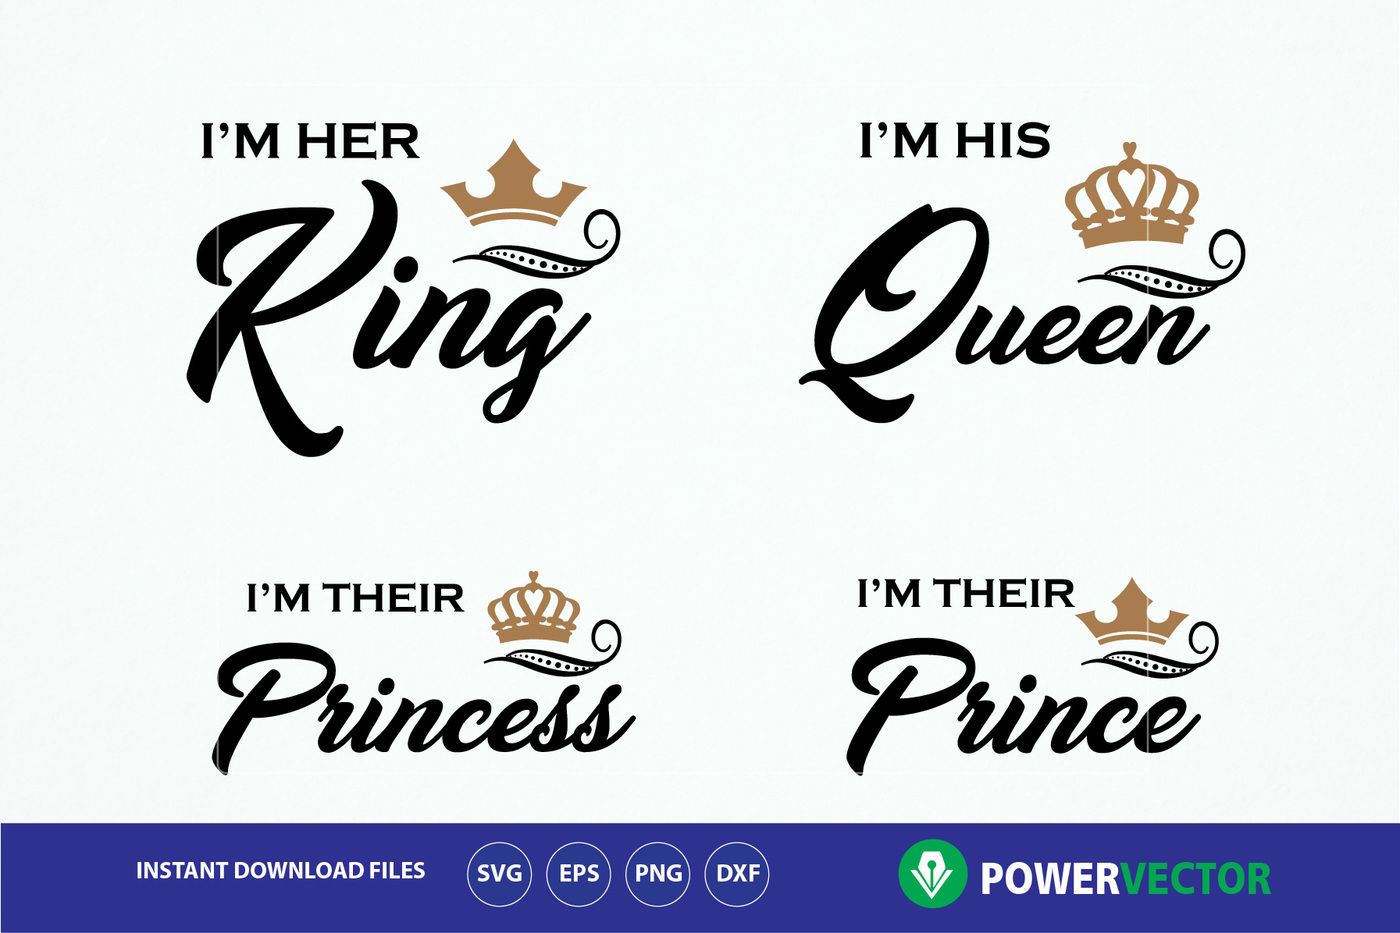 King Queen Princess Prince T Shirts Royal Family Shirt Design By Powervector Thehungryjpeg Com